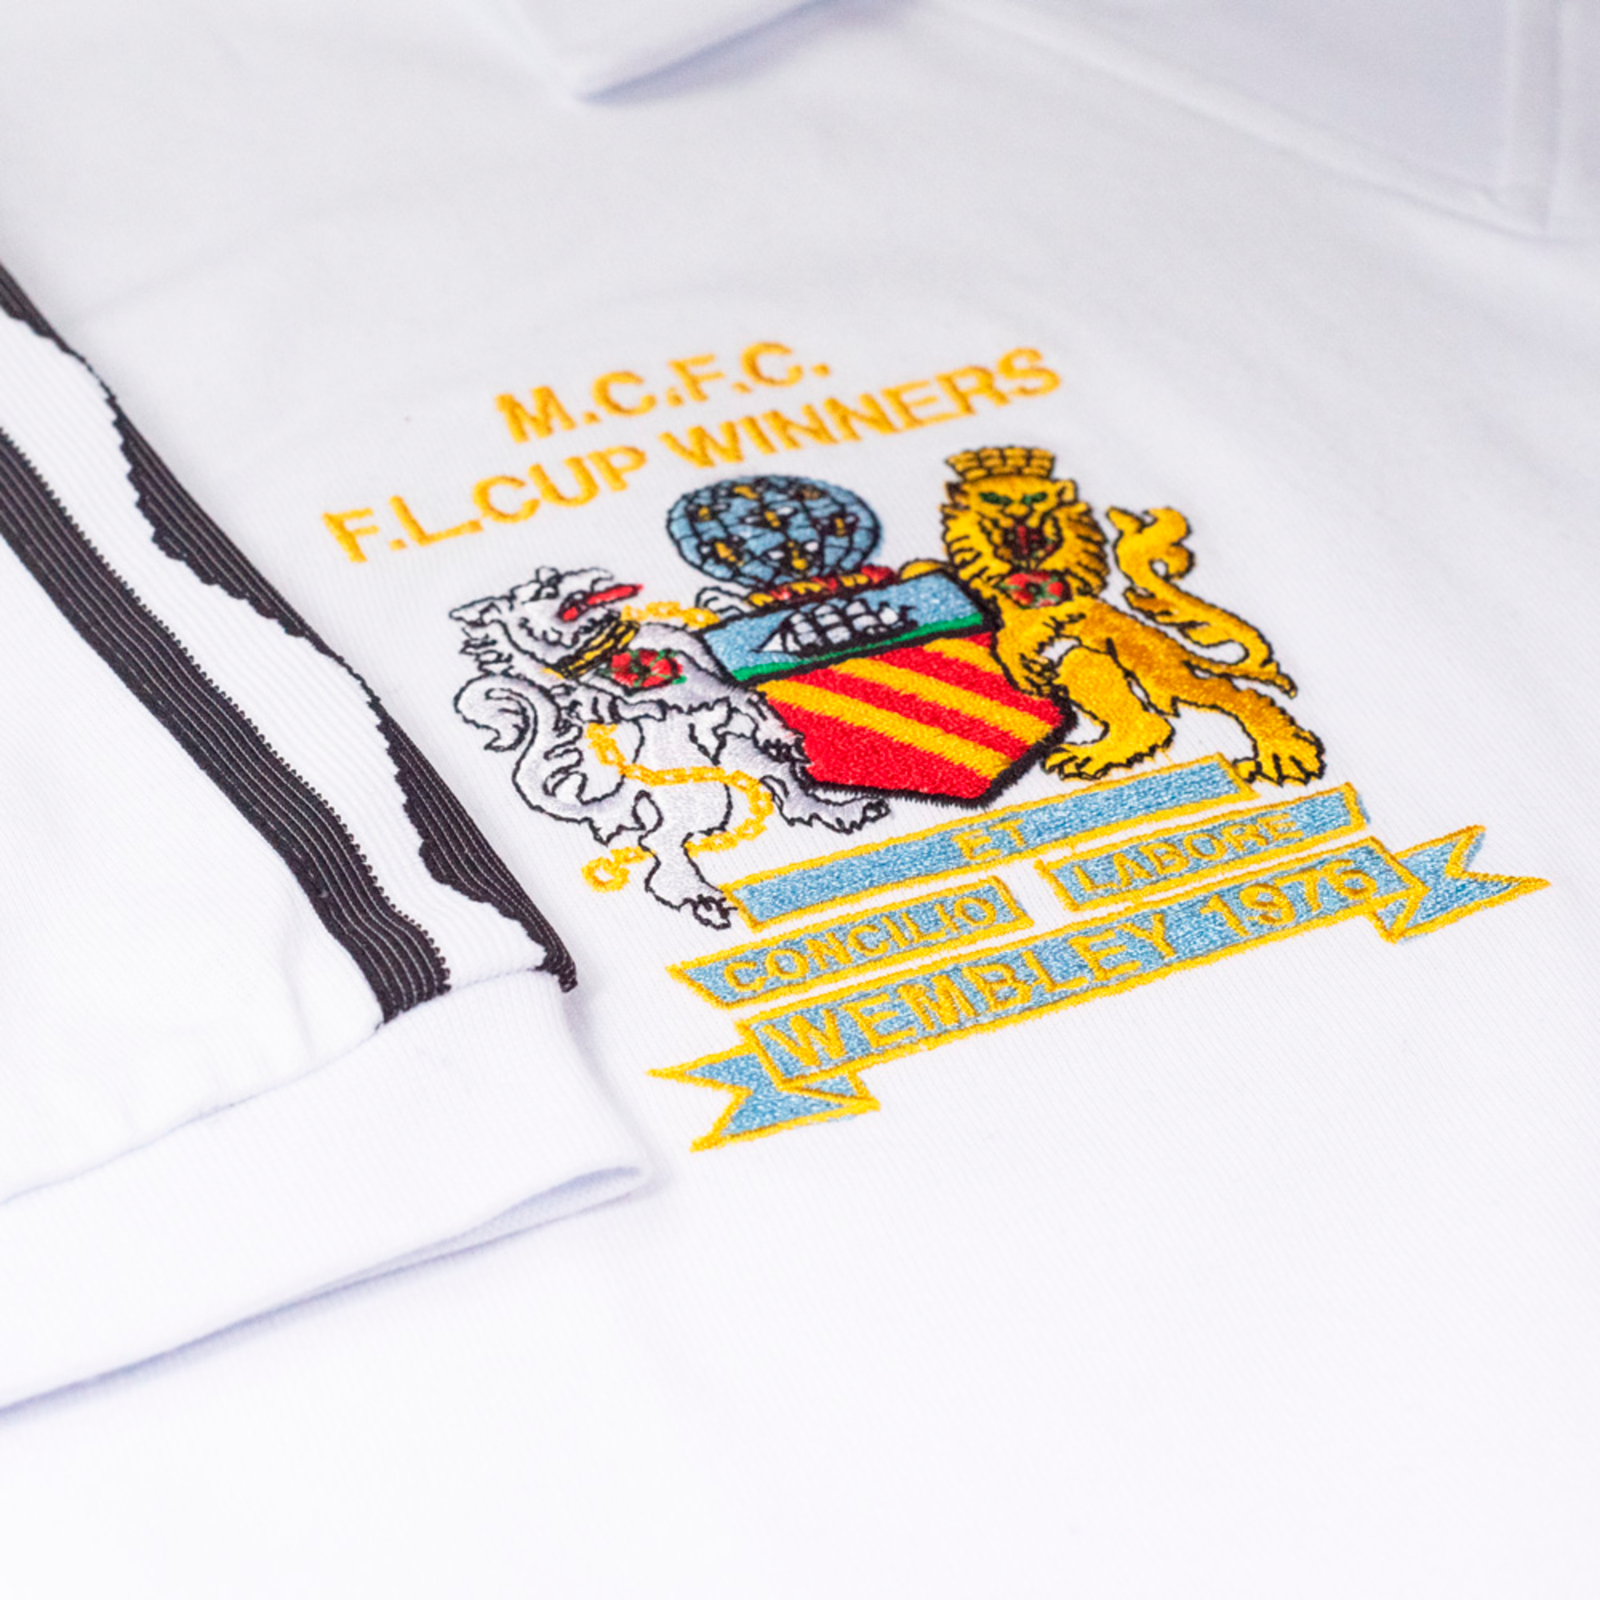 Official League Cup Shirts & Jerseys, League Cup Apparel